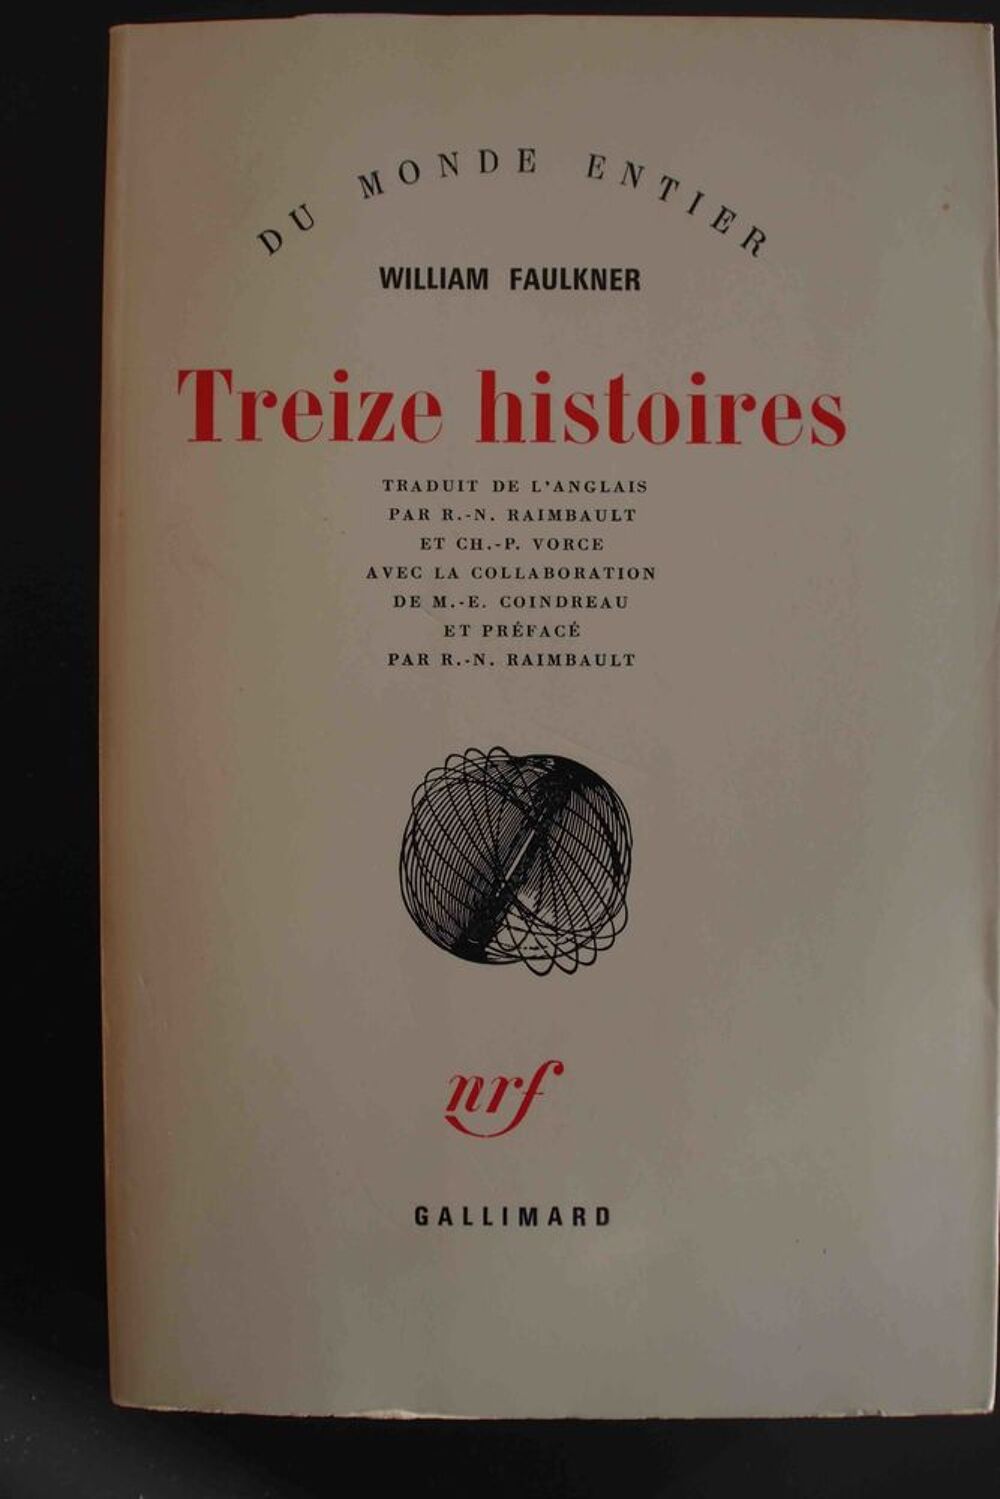 Treize histoires - William Faulkner, Livres et BD